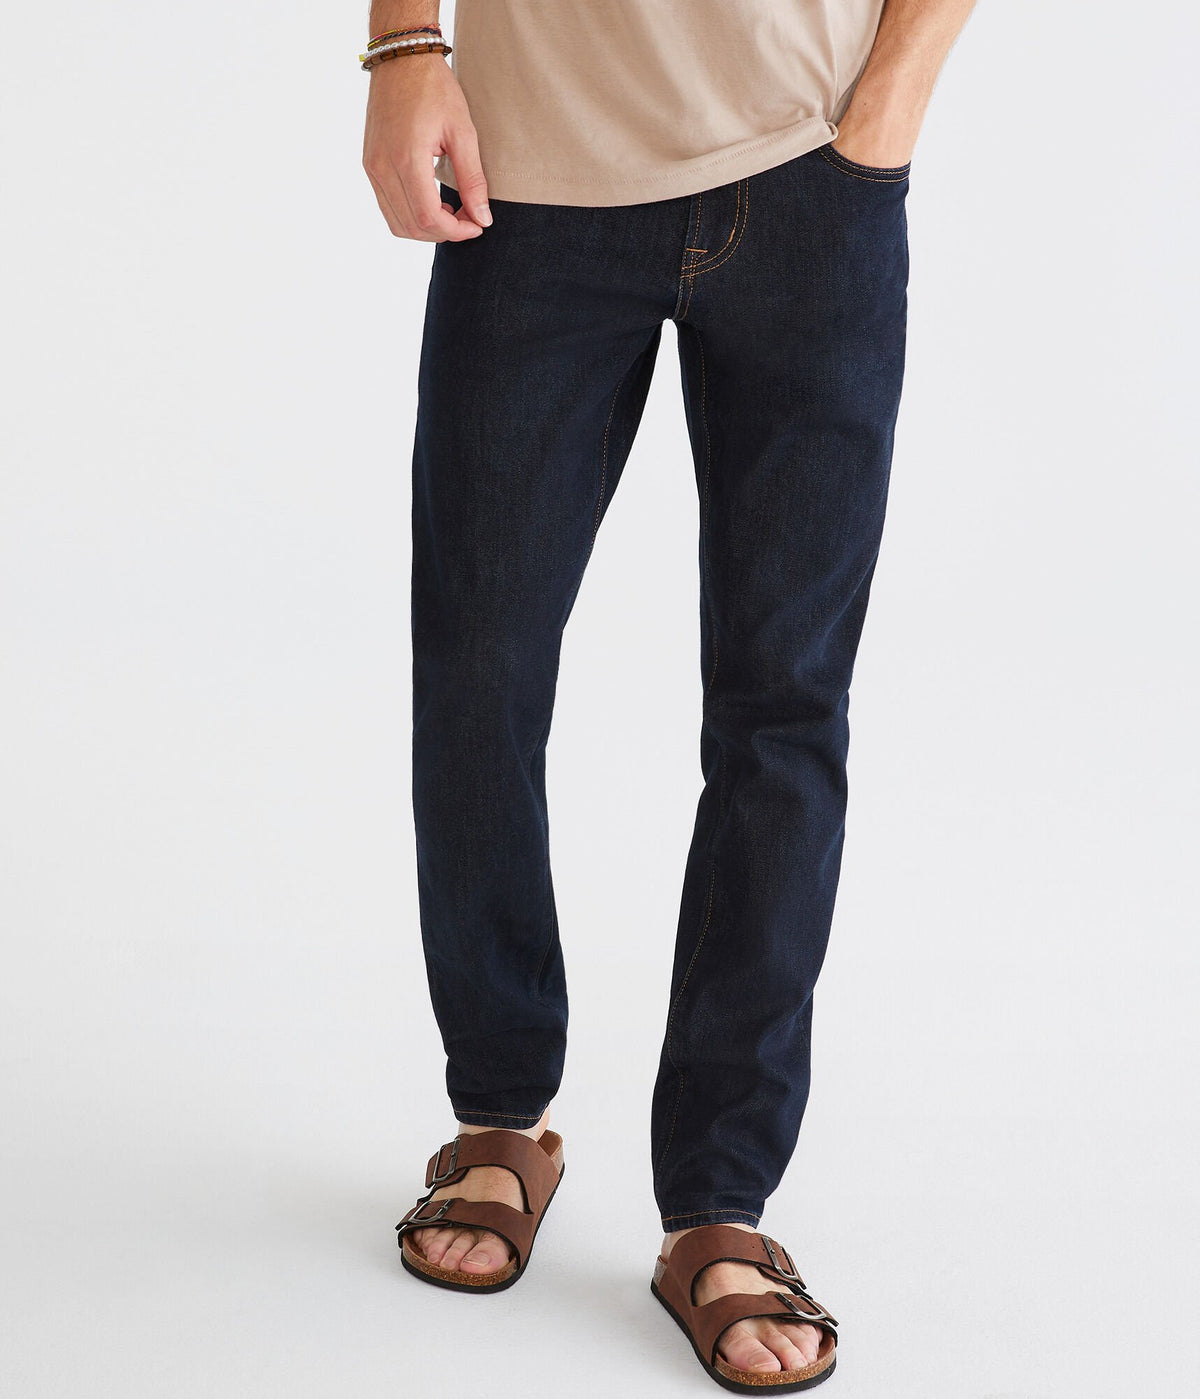 Aeropostale Mens' Skinny Jean - Denim - Size 31X30 - Cotton - Teen Fashion & Clothing Rinse